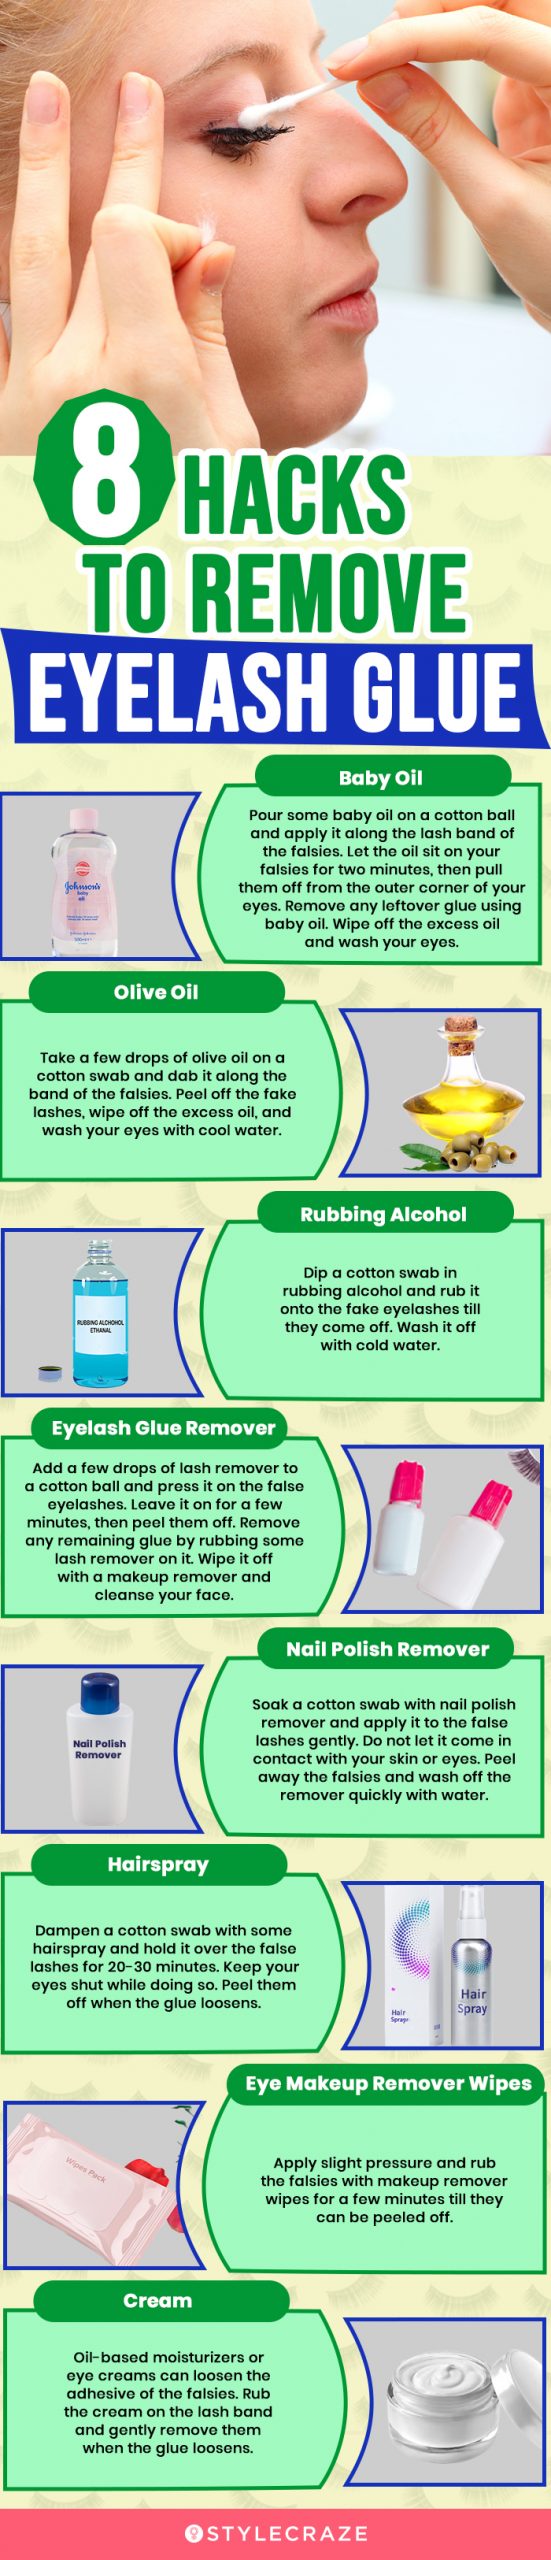 8 hacks to remove eyelash glue (infographic)